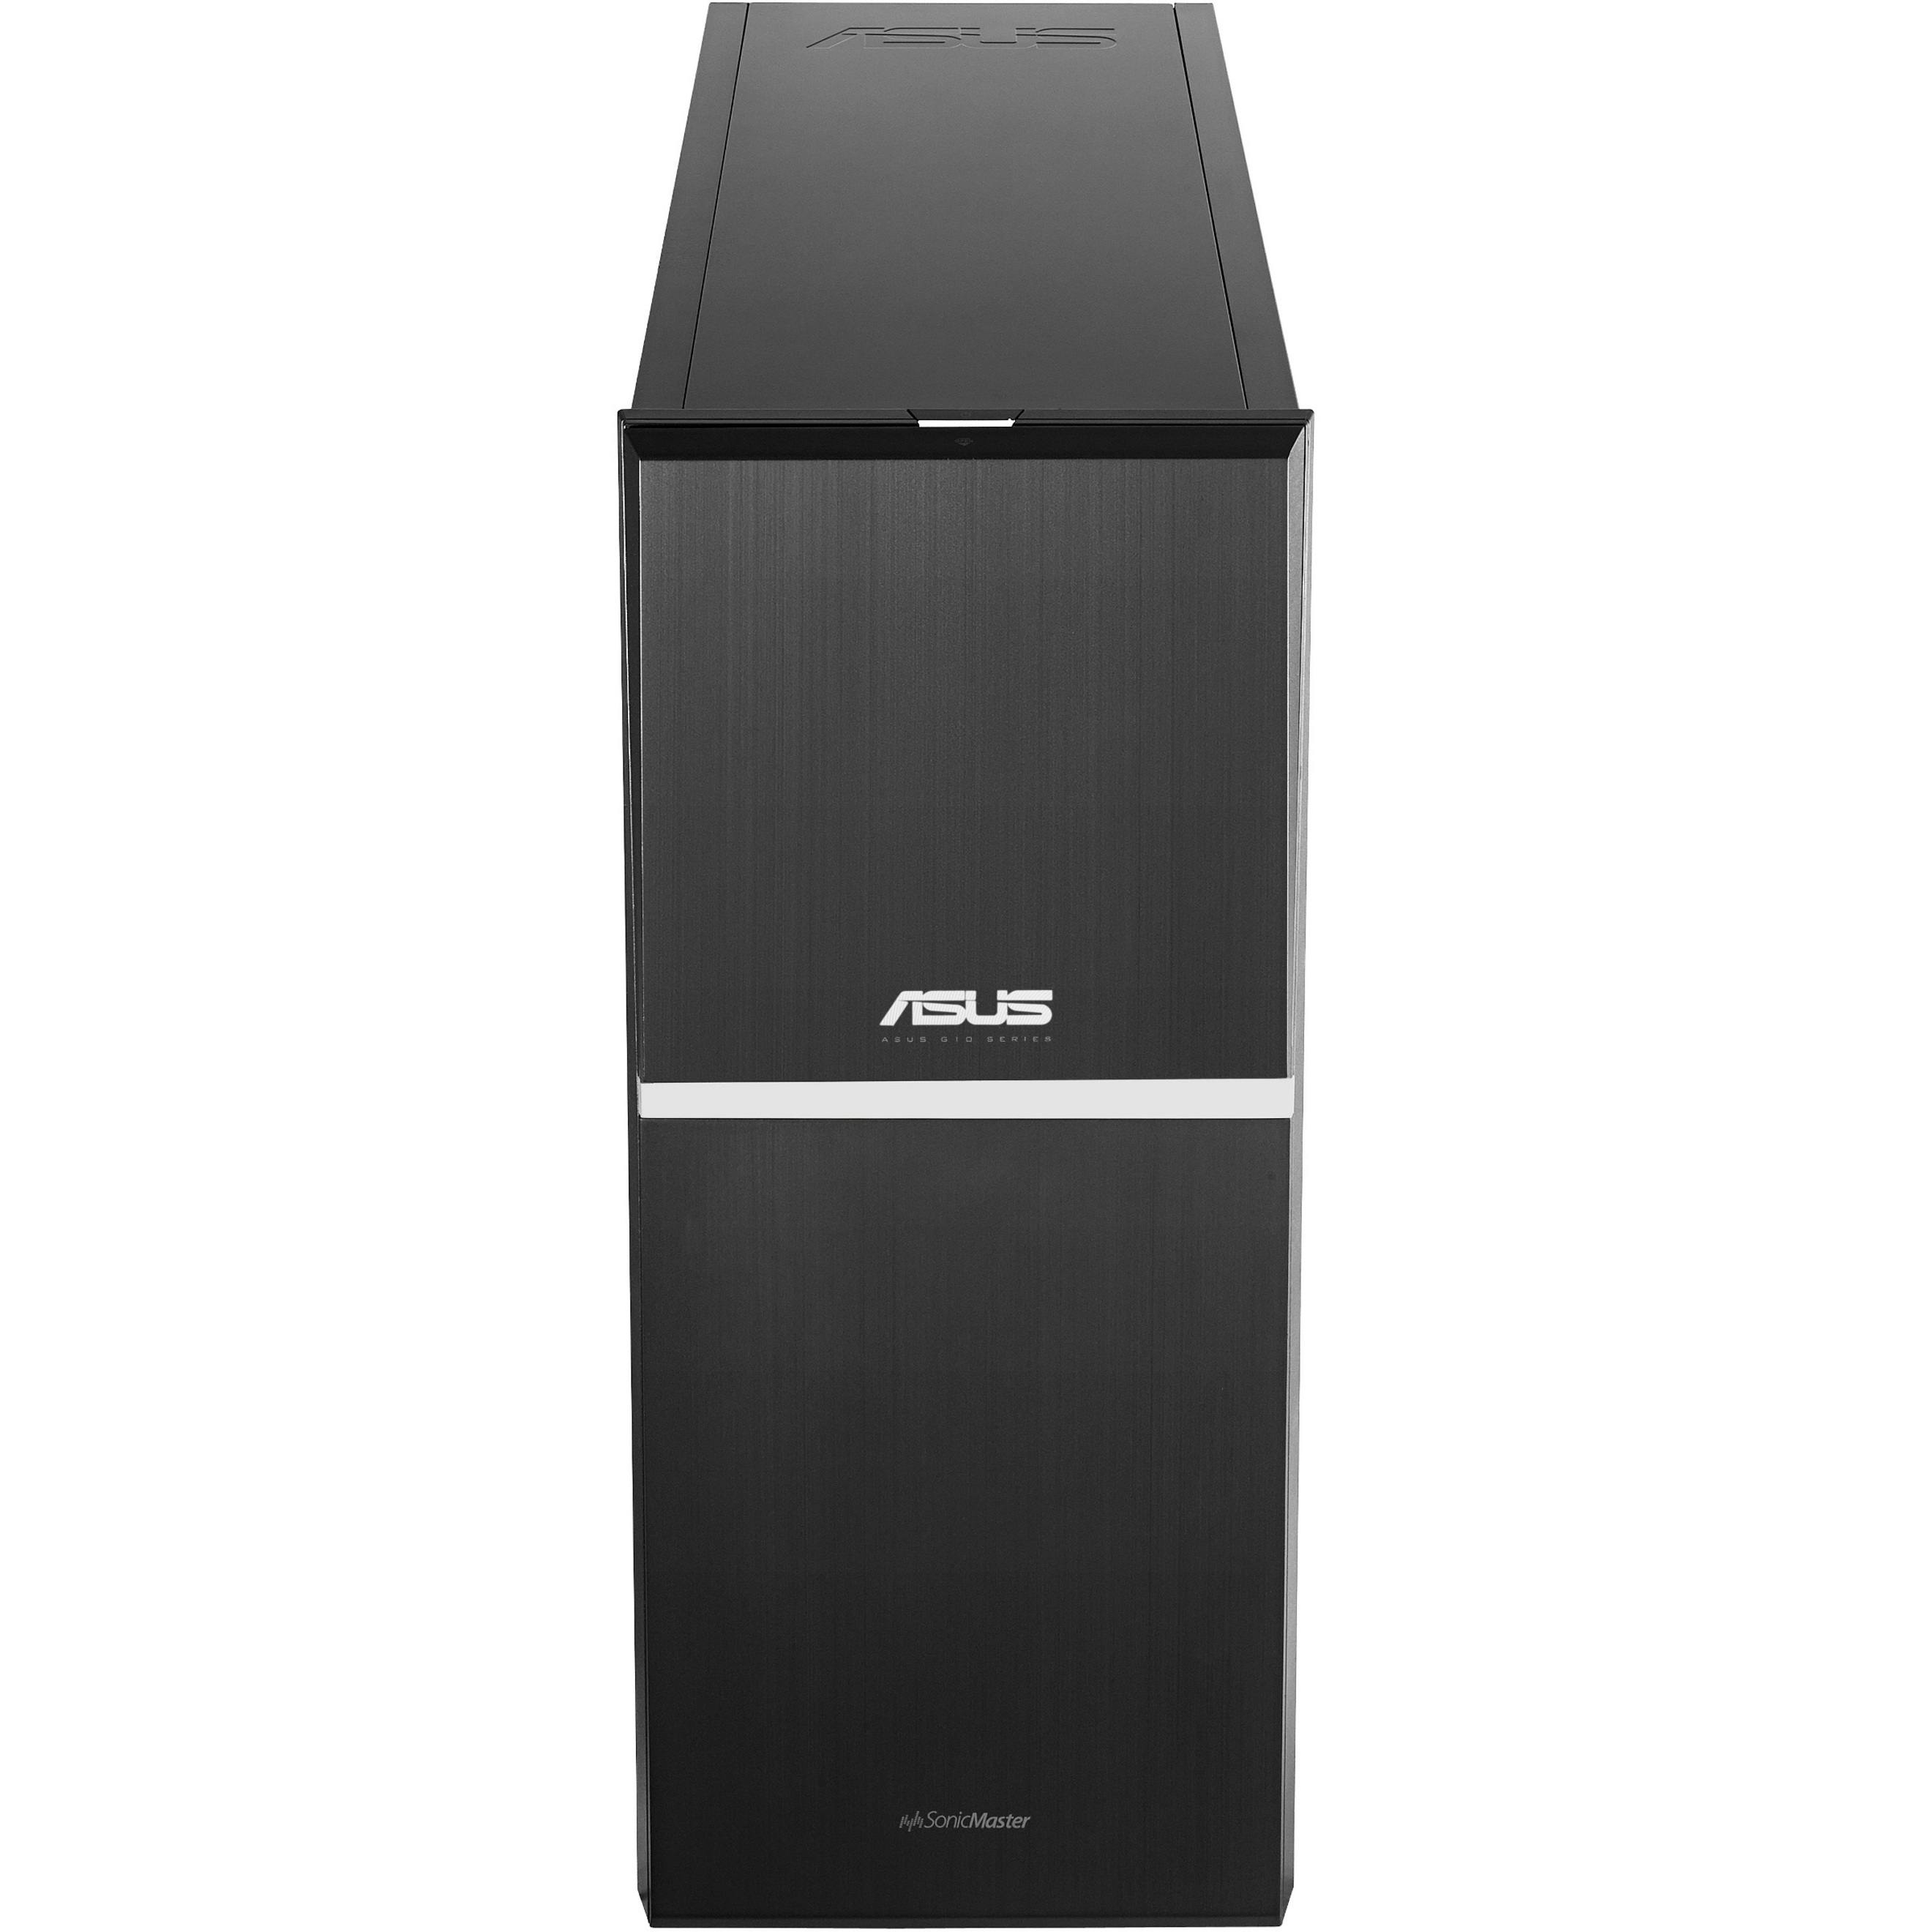 Asus ROG Gaming Desktop, Intel Core i7 i7-4770, 32GB RAM, 3TB HD, Blu-Ray/DVD Combo Drive, Windows 8, G10AC-US002S - image 1 of 6